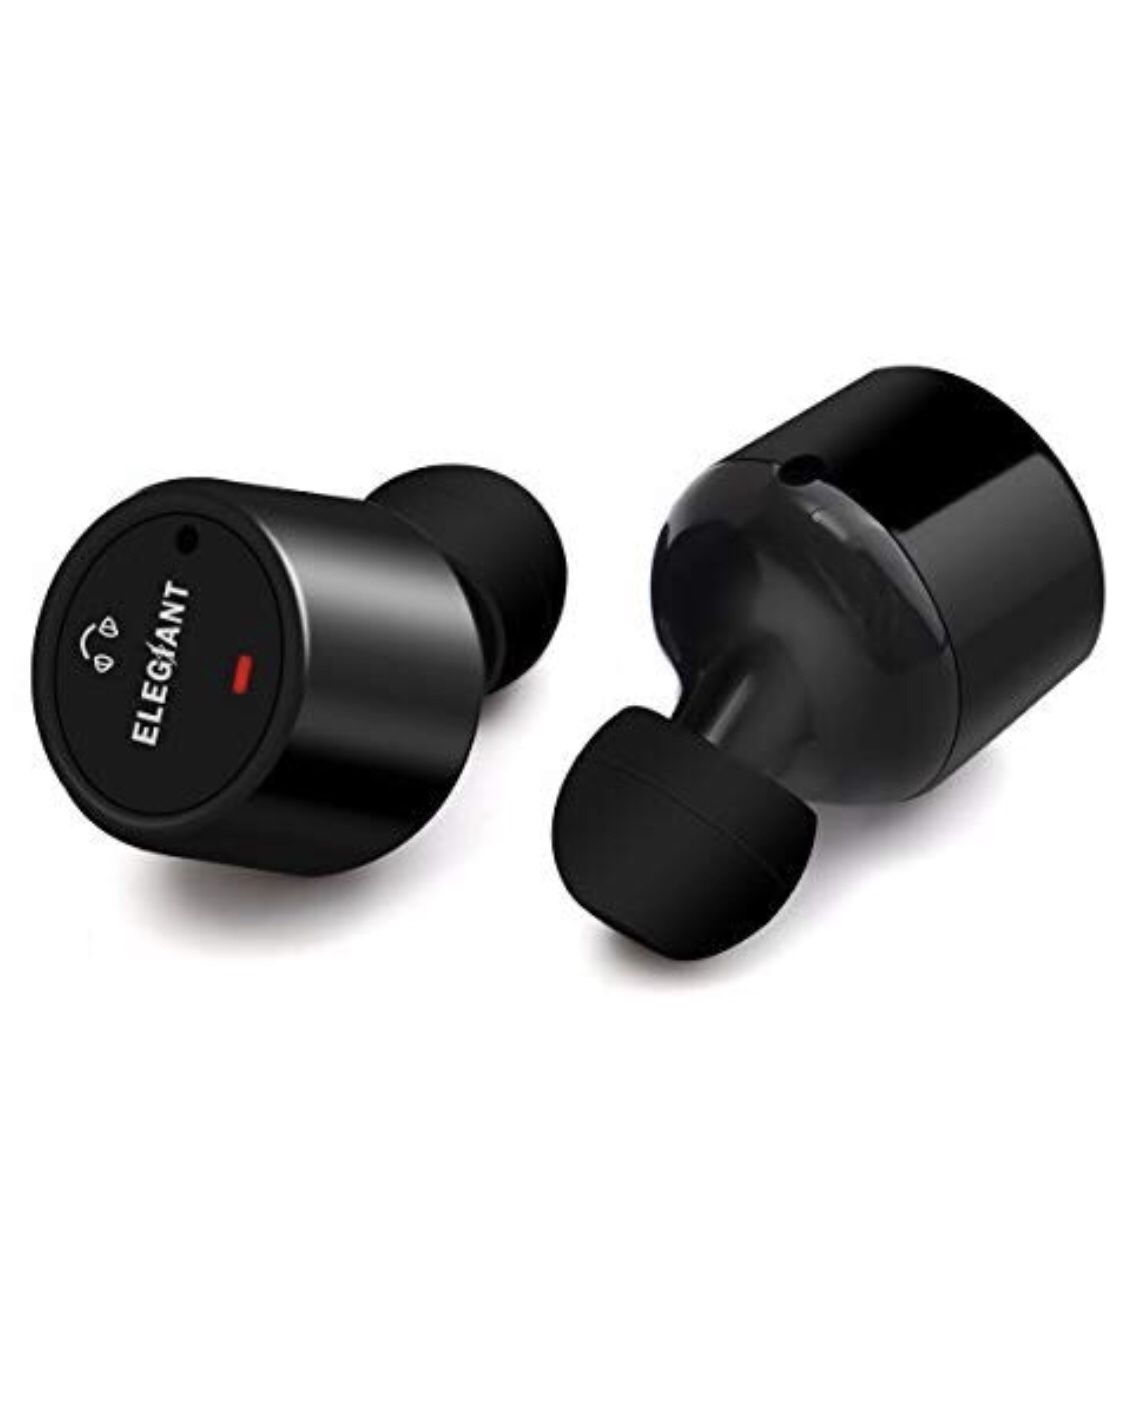 True Wireless Earbuds, ELEGIANT Stereo Bluetooth Headphones Mini in-ear Sport Earphones Earbuds with Mic for iPhone 8/7/7Plus/6/6s/6Plus/iPad/Samsung